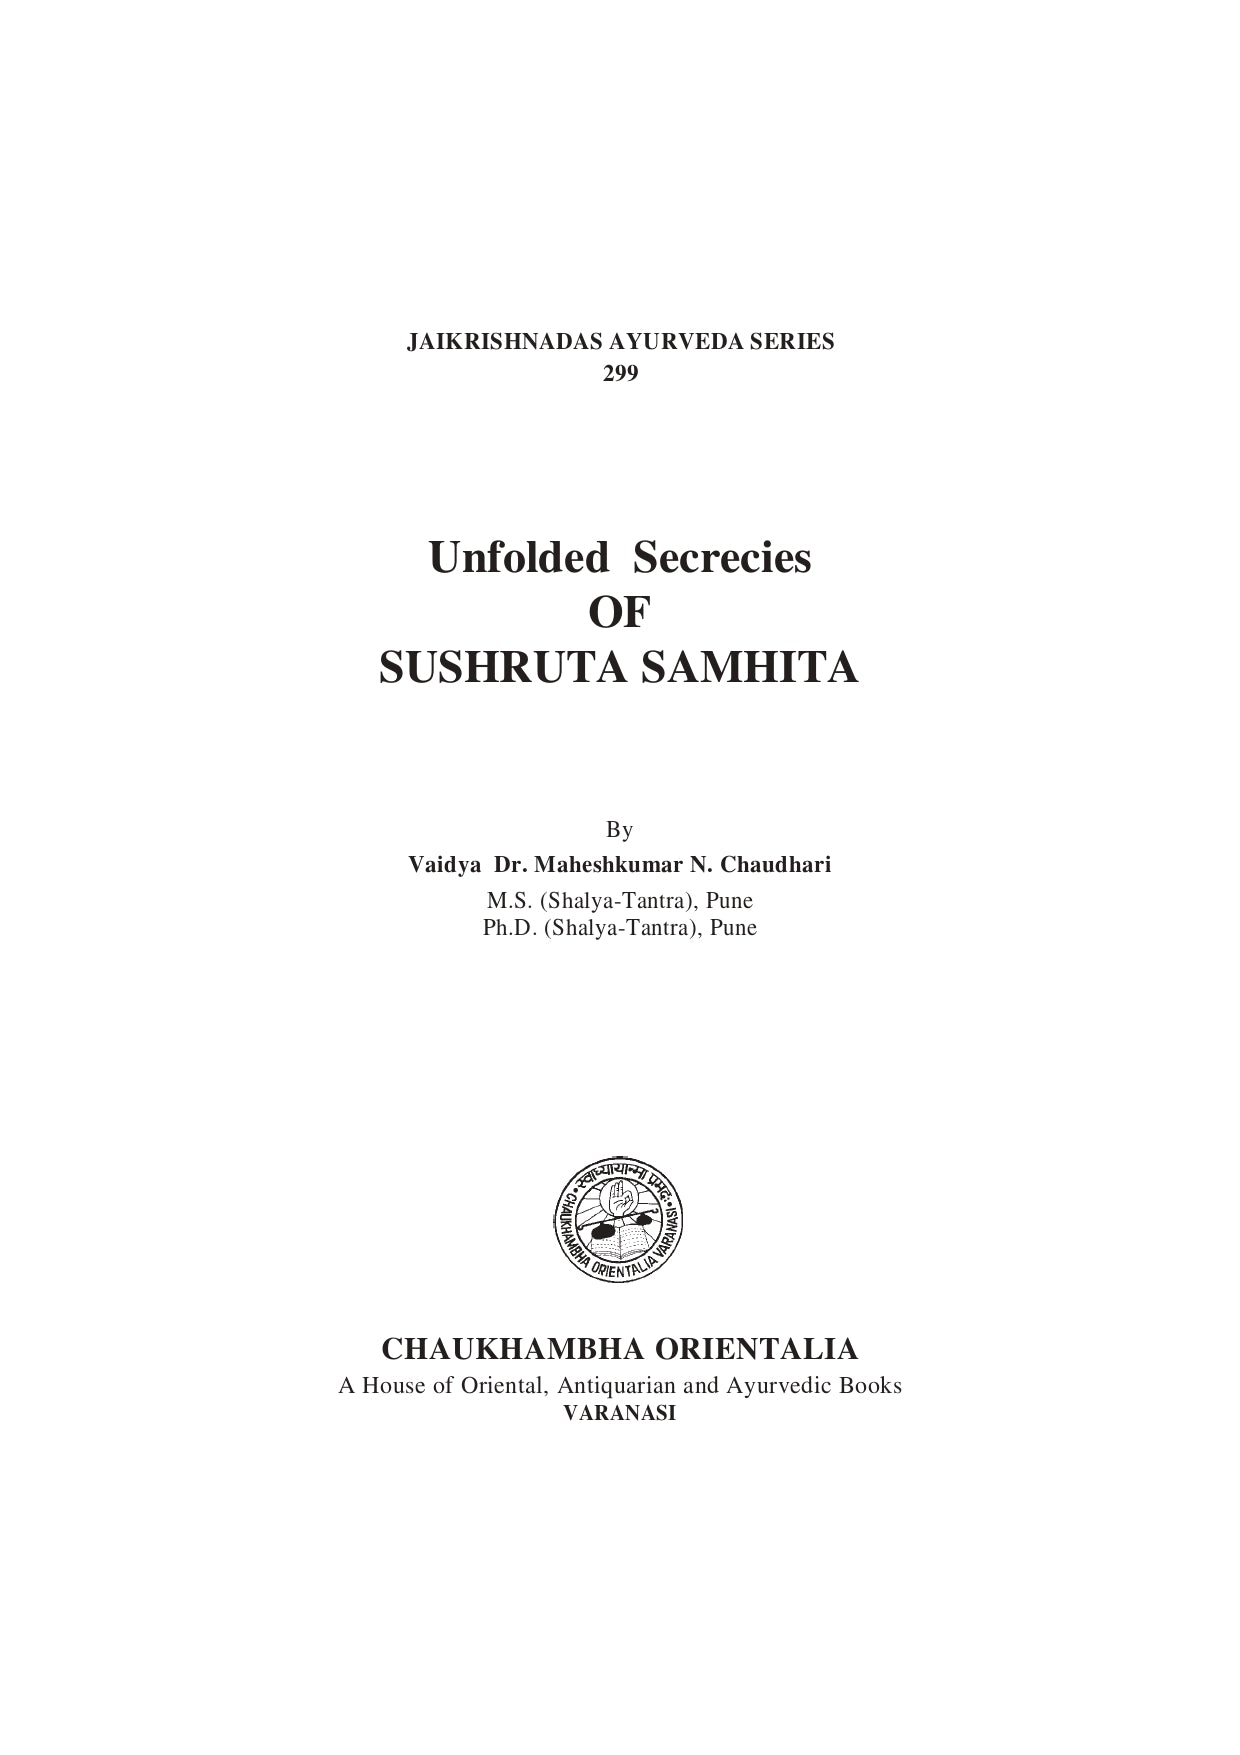 Chaukhambha Orientalia Unfolded Secrecies of Sushruta Samhita